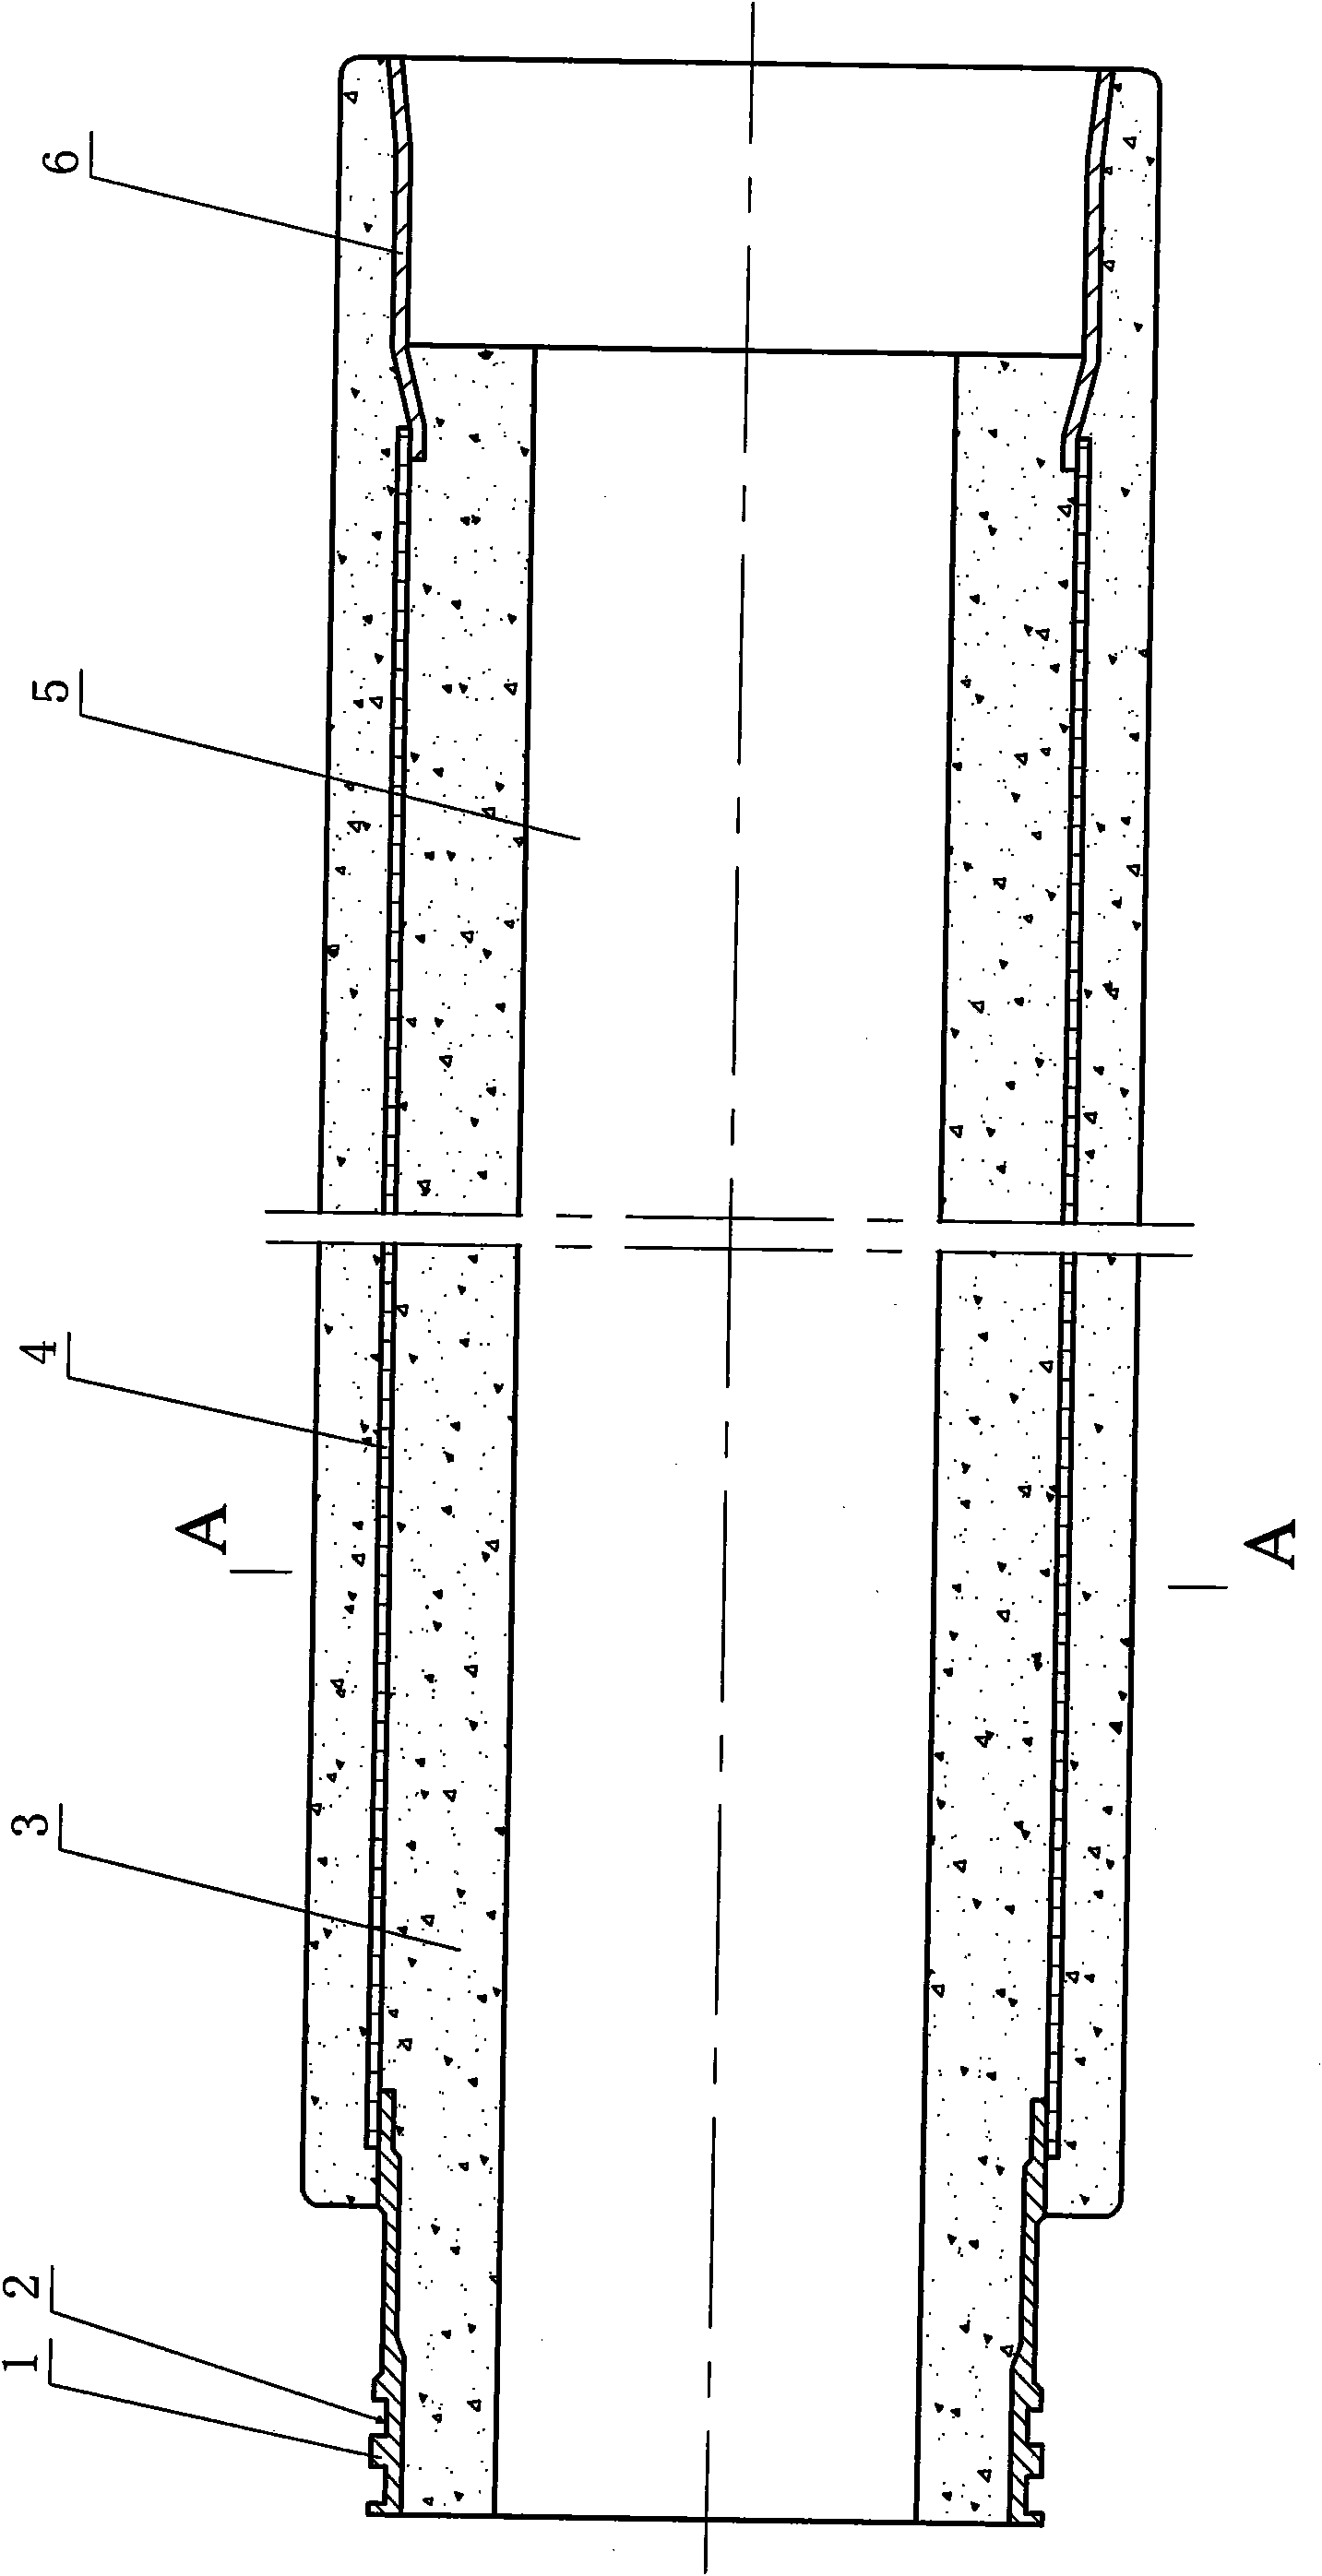 Precast concrete pipe gallery with longitudinal bars